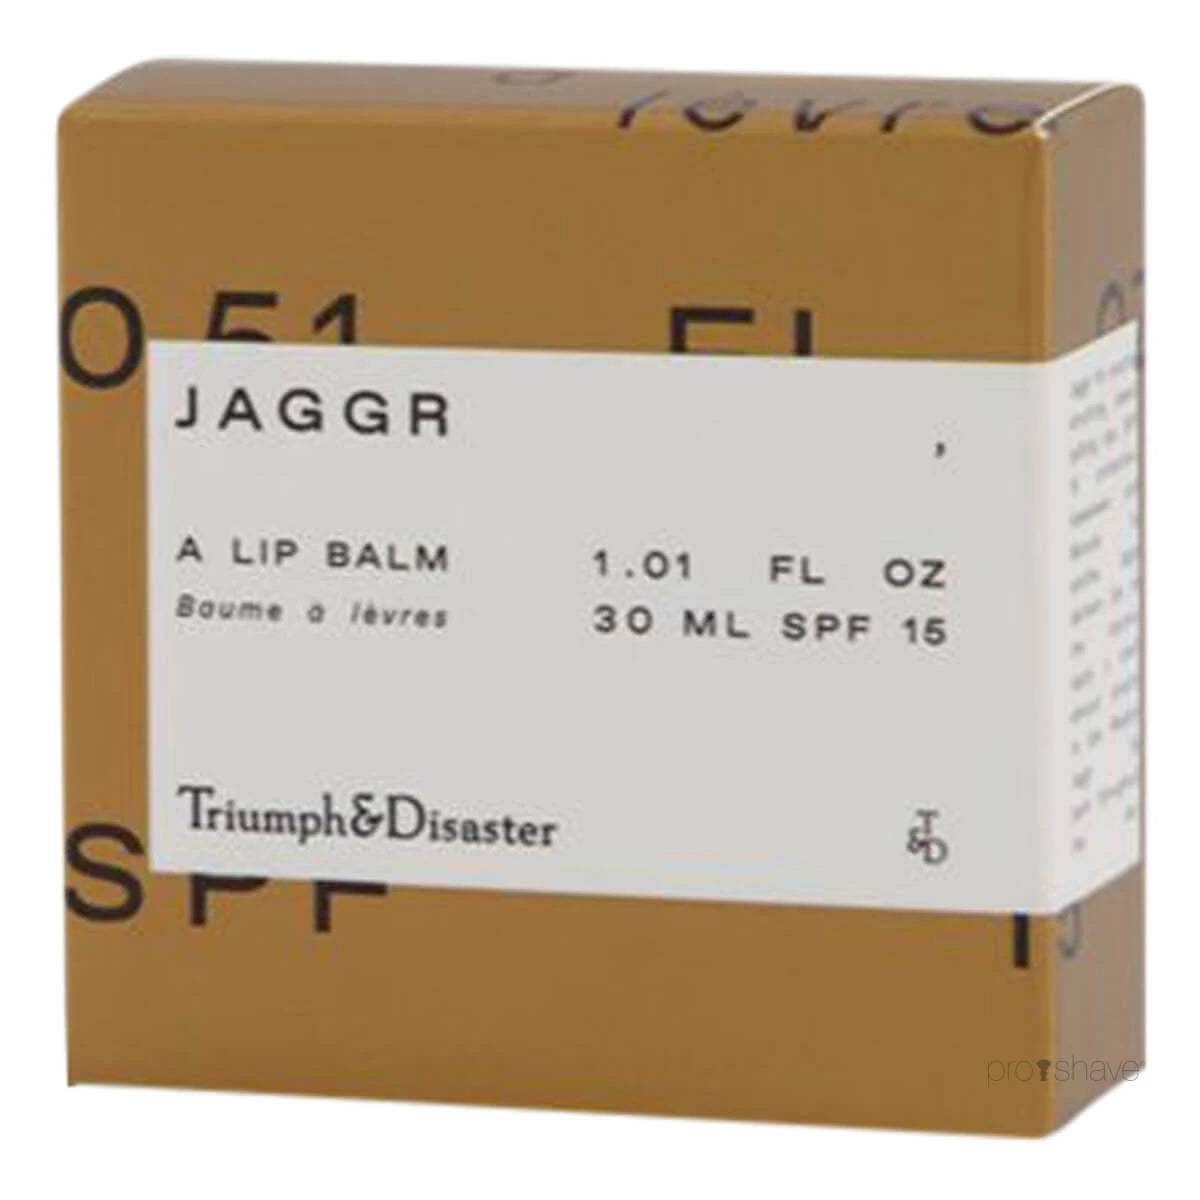 Triumph & Disaster, Jagger Lip Balm SPF15